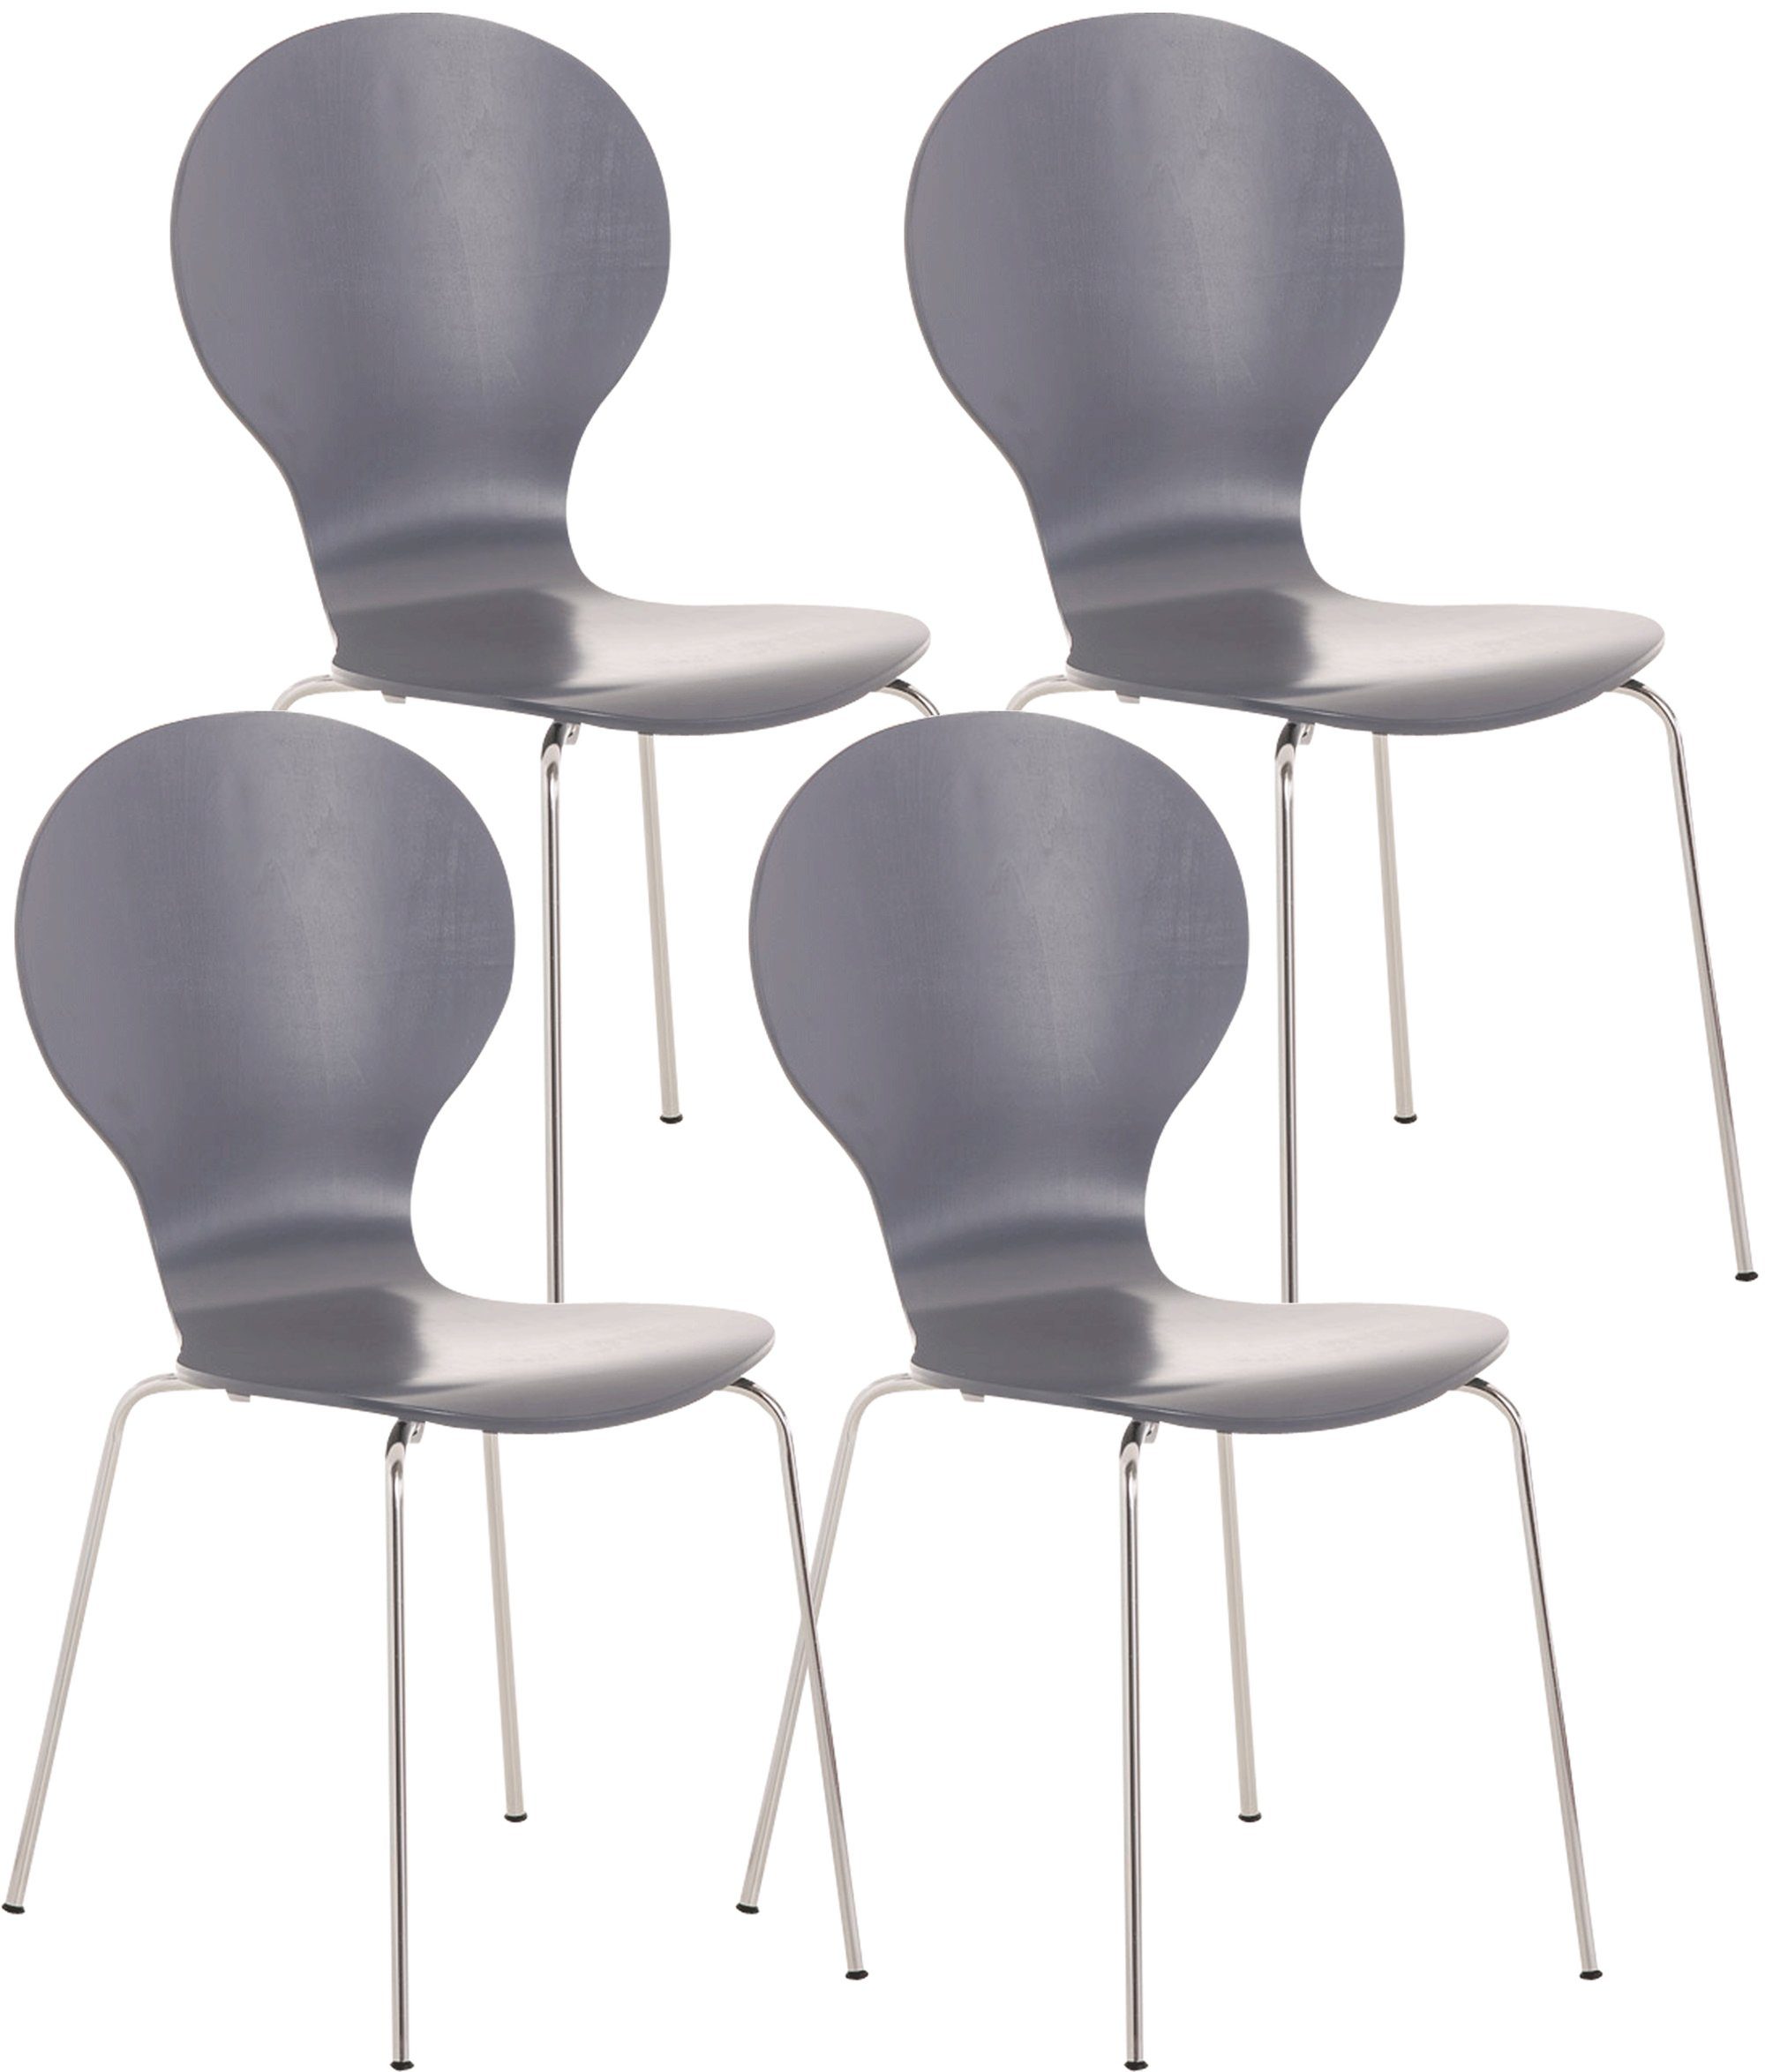 TPFLiving Besucherstuhl Daggy mit ergonomisch geformter Sitzfläche - Konferenzstuhl (Besprechungsstuhl - Warteraumstuhl - Messestuhl, 4 St), Gestell: Metall chrom - Sitzfläche: Holz grau